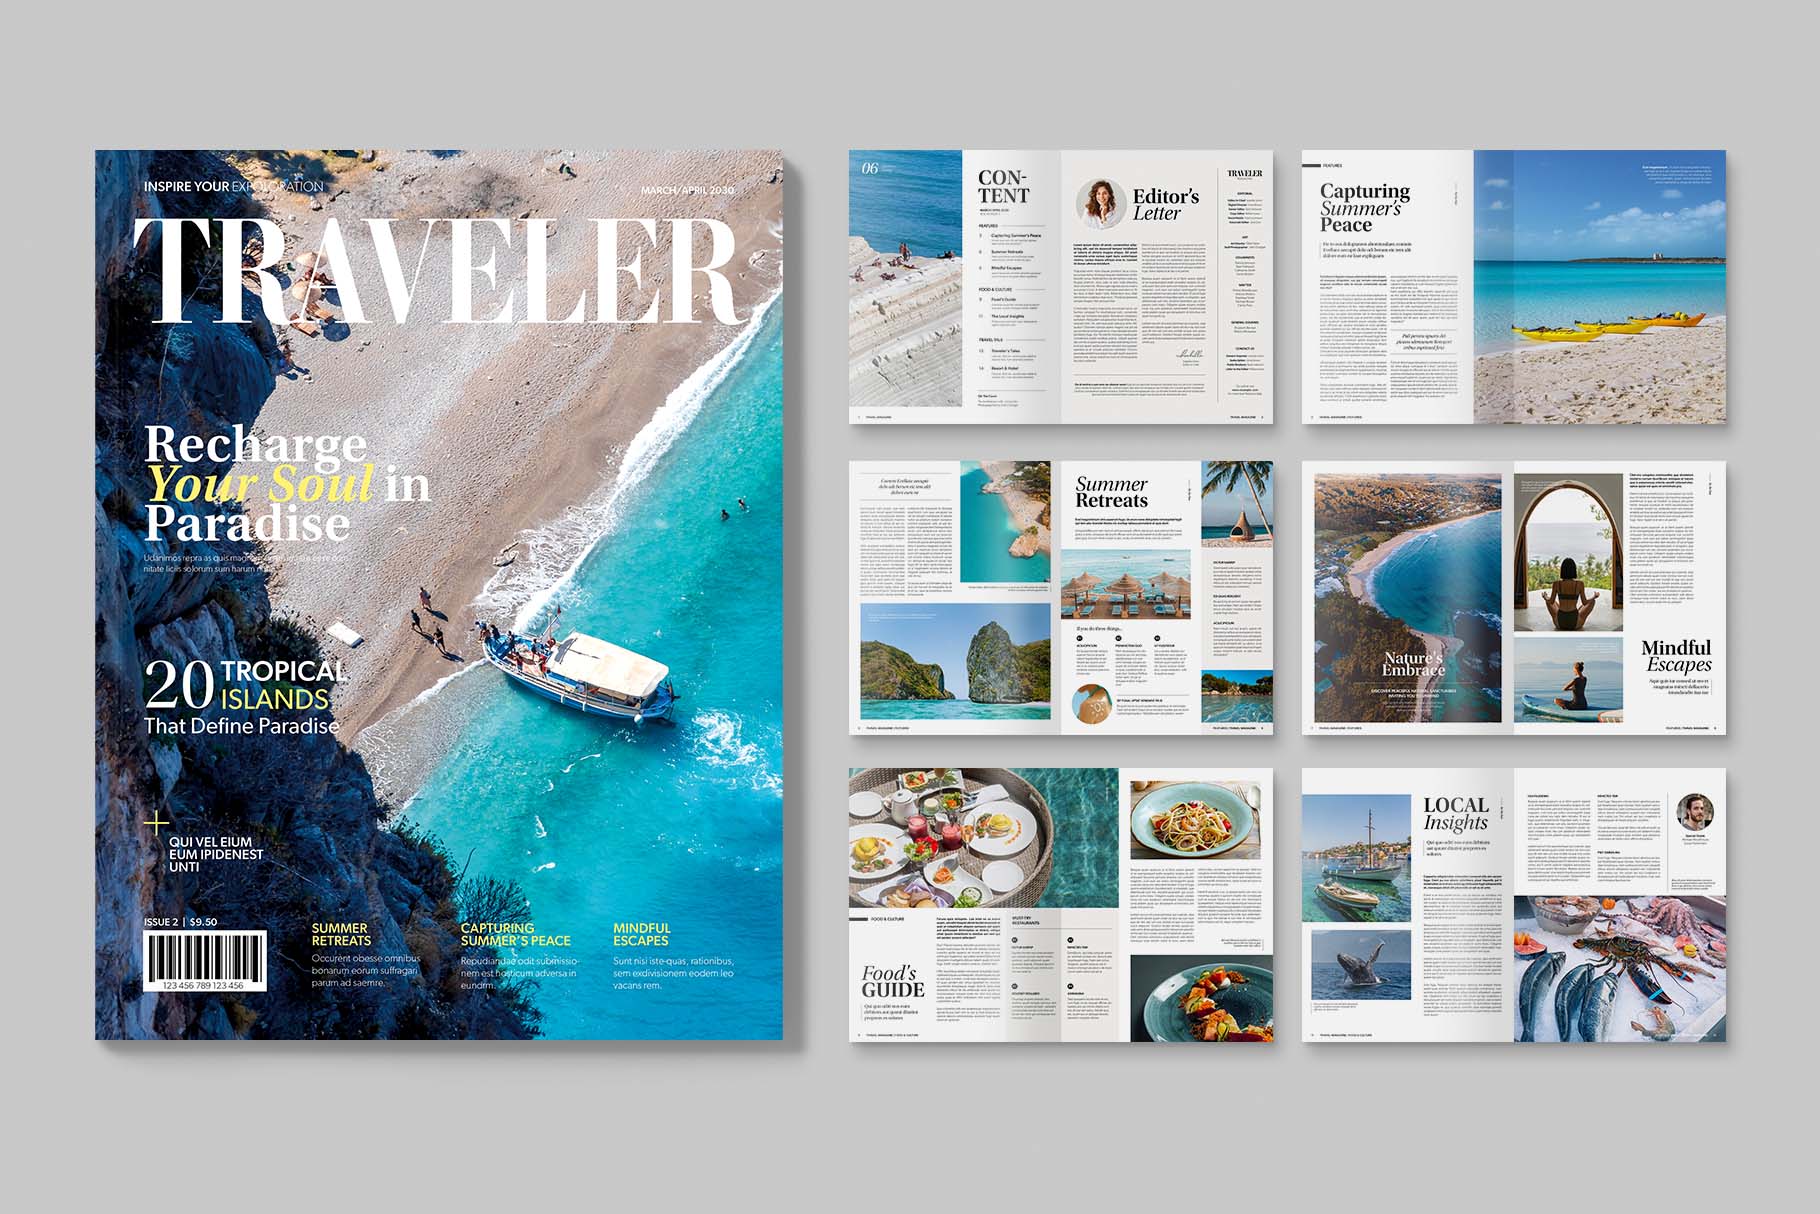 Traveler Magazine Letter Template in INDD format